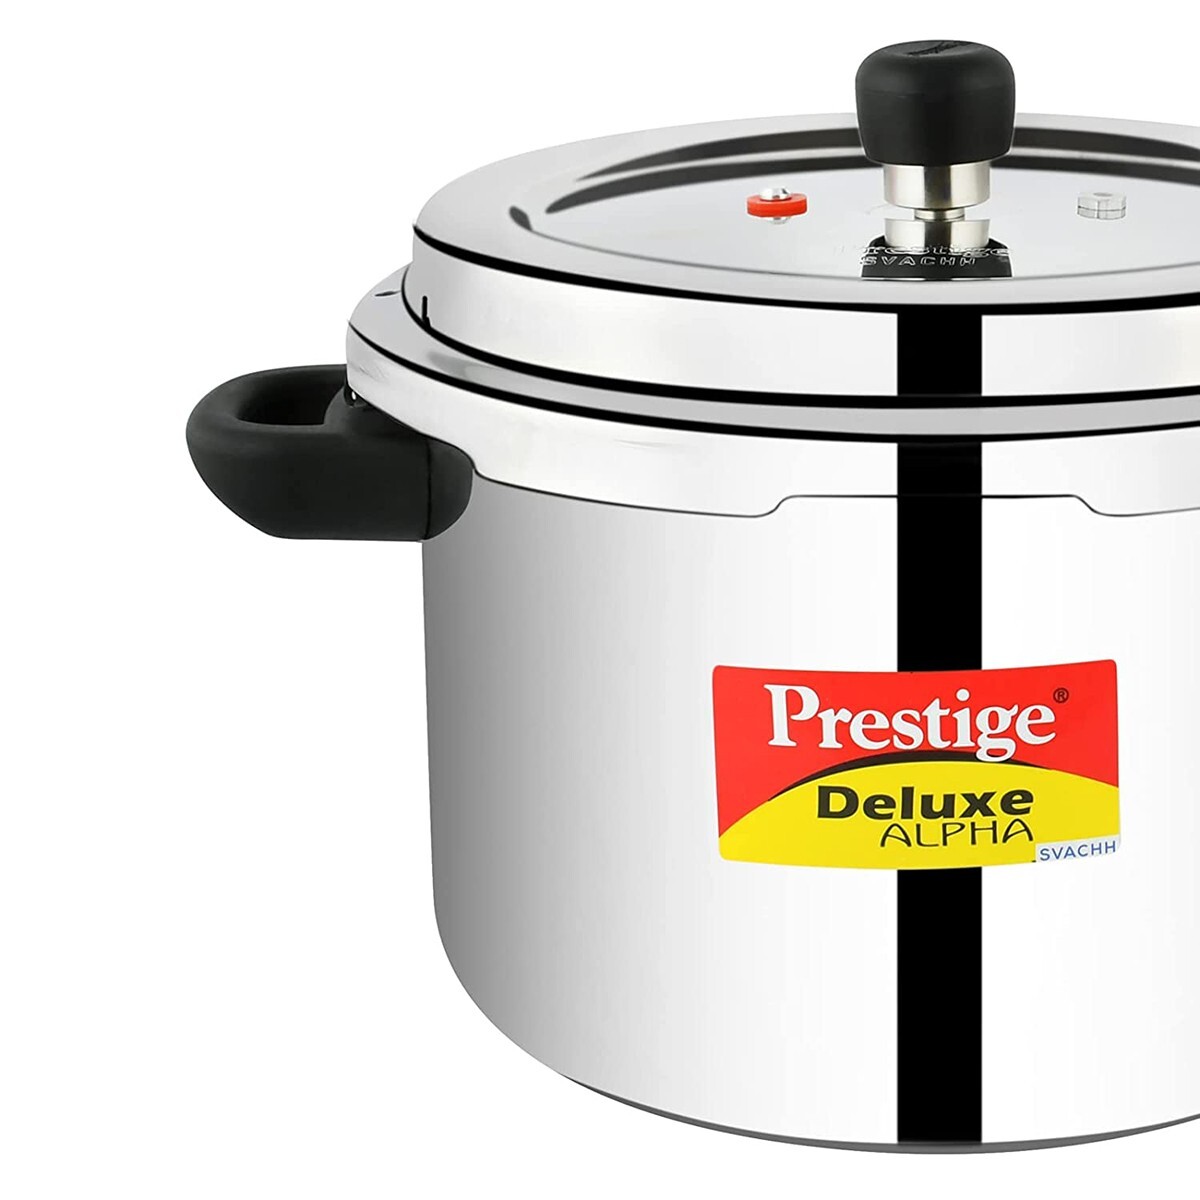 Prestige Stainless Steel Pressure Cooker Svachh Deluxe Alpha 6.5L